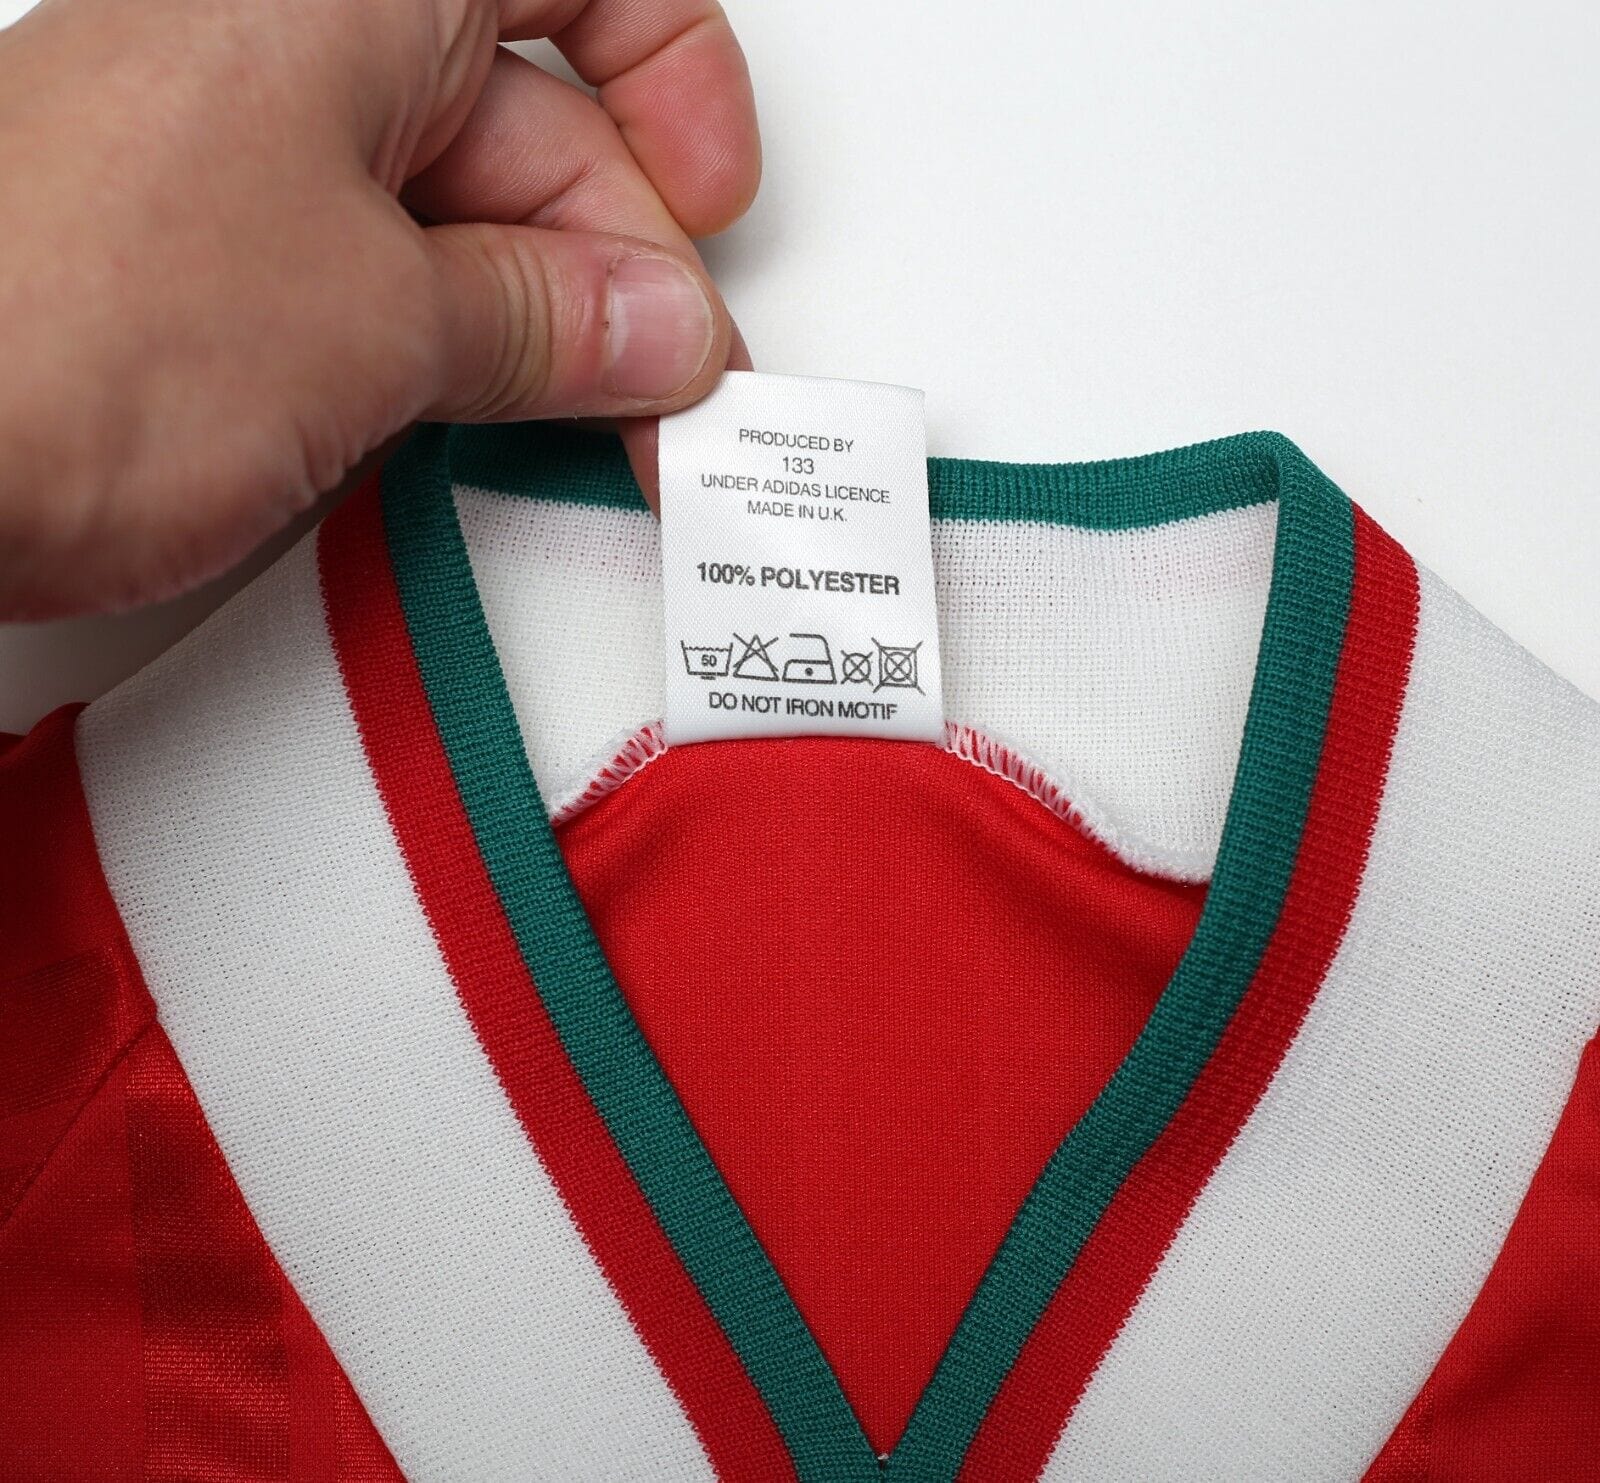 Liverpool 1994 - 1996 Third football shirt jersey Adidas size 38-40